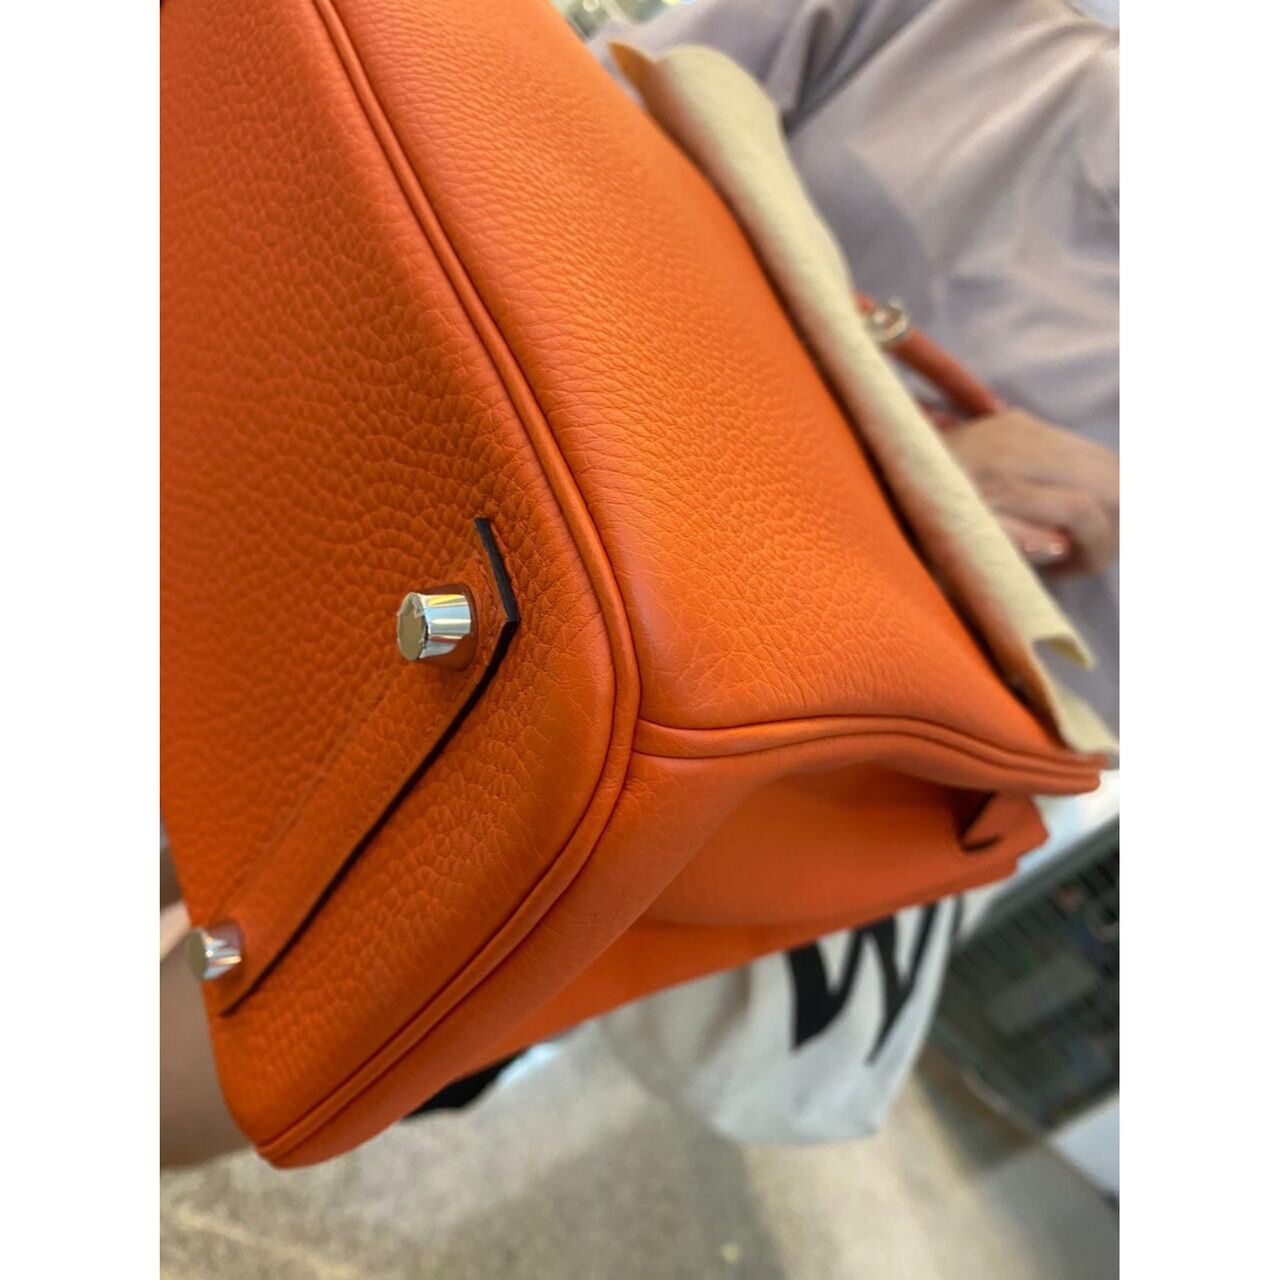 Hermes Orange Organic Handbag